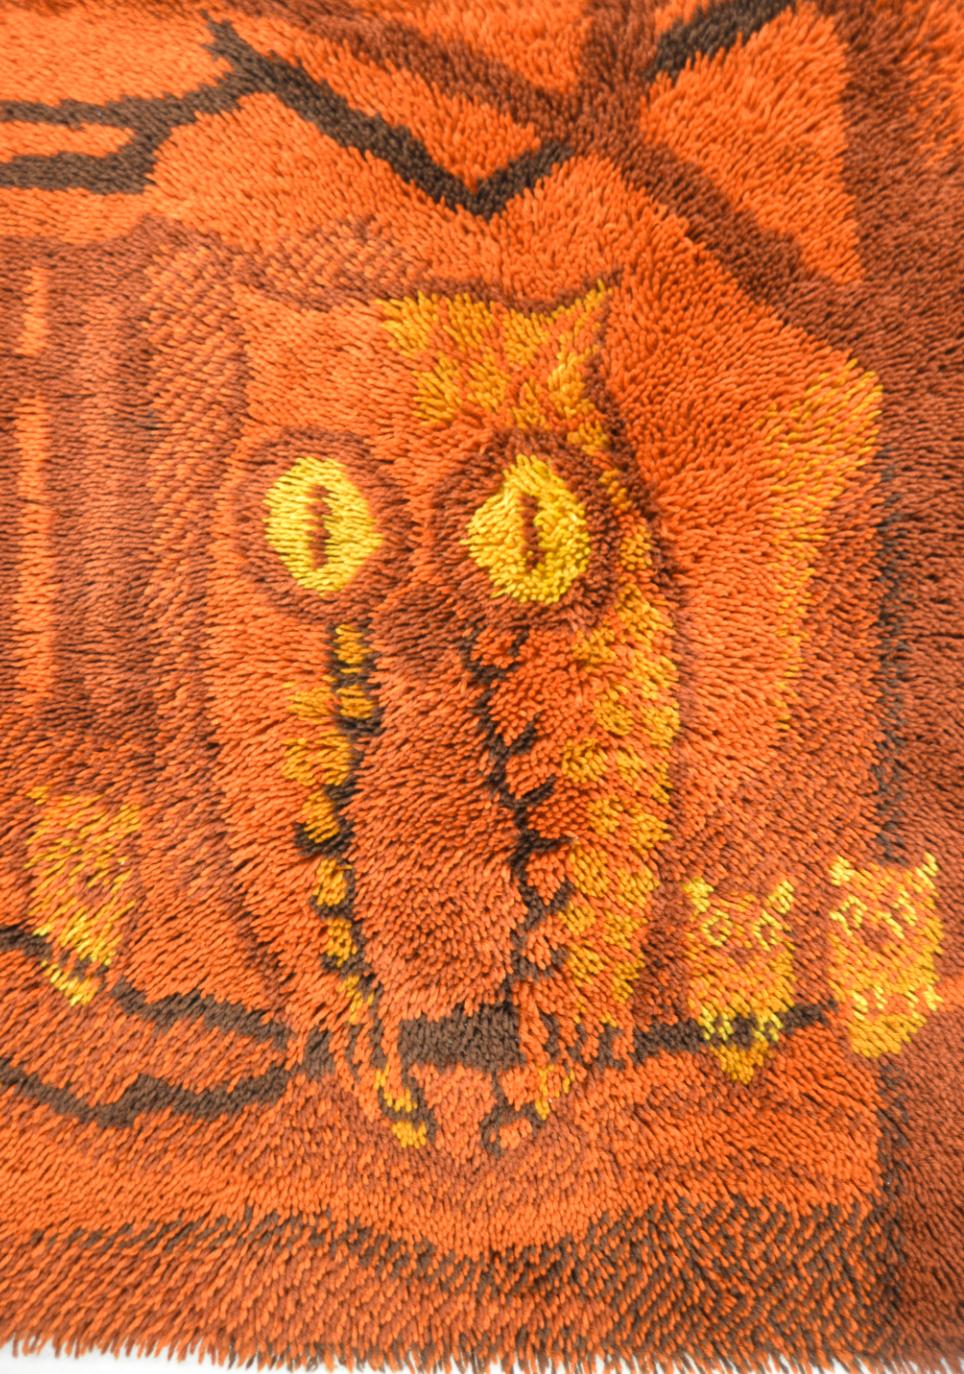 Scandinavian Modern Midcentury EGE VAEGRYA Danish Scandinavian Owl Wall hanging Tapestry Art Rug 70s For Sale